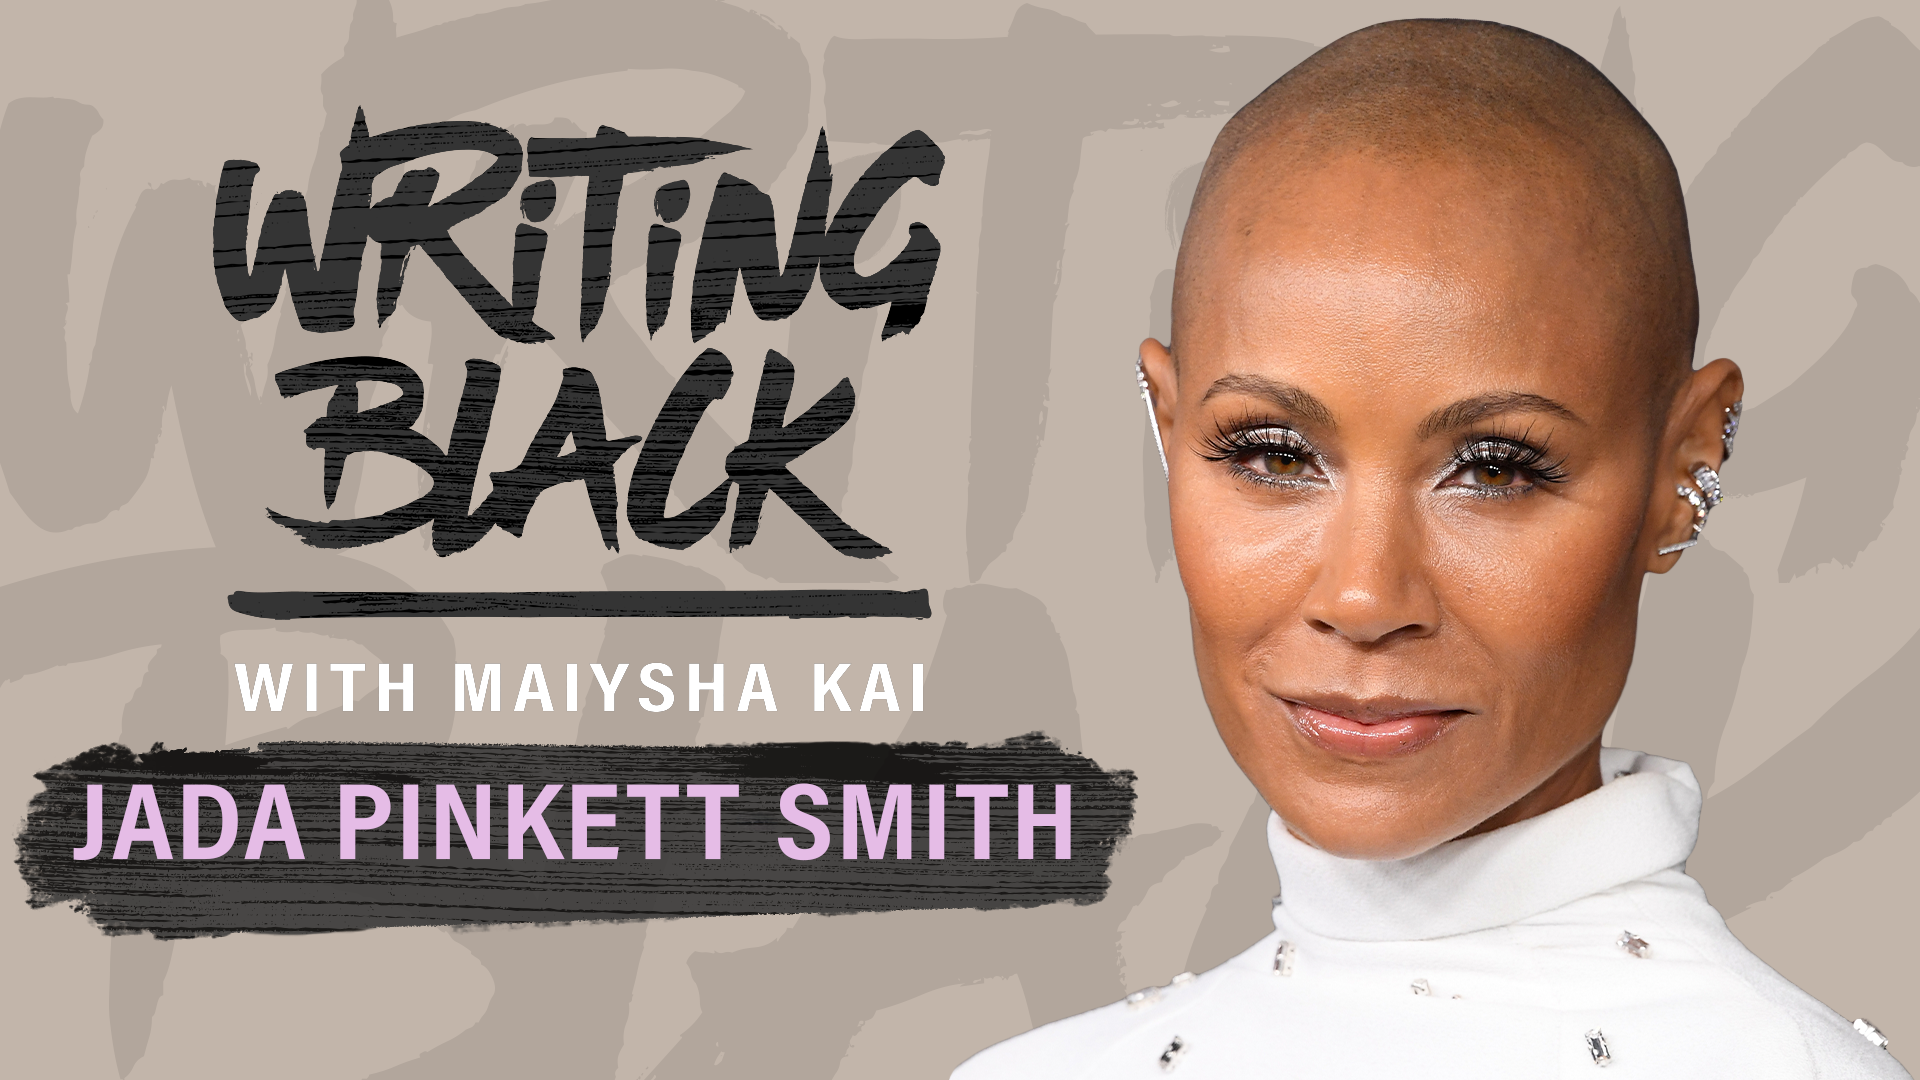 Jada Pinkett Smith talks ‘Worthy’ with ‘Writing Black’